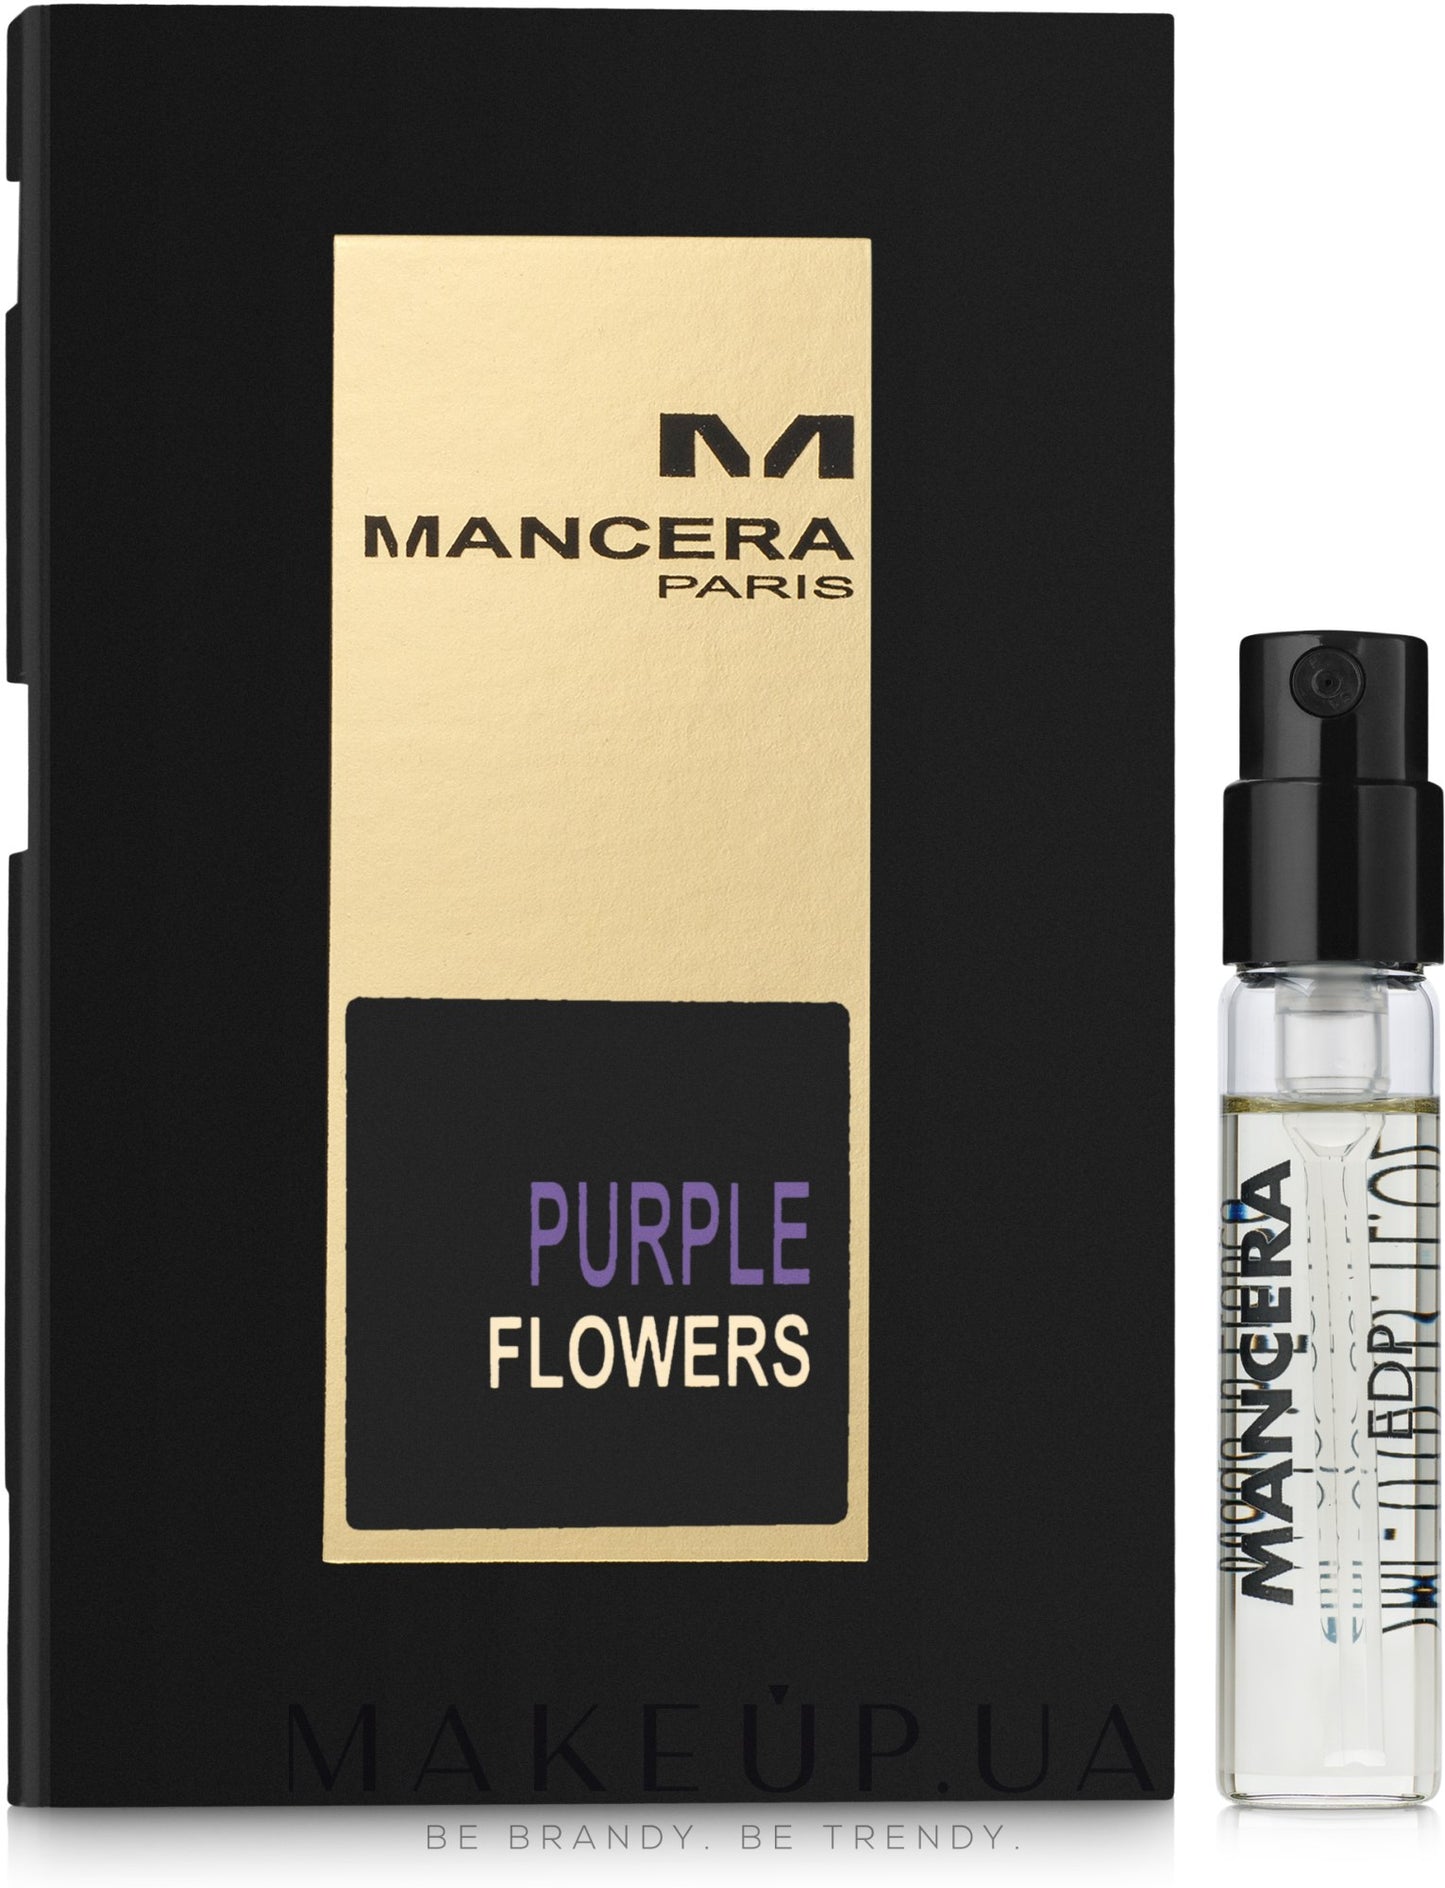 Mancera Purple Flowers virallinen näyte 2ml 0.07 fl.oz